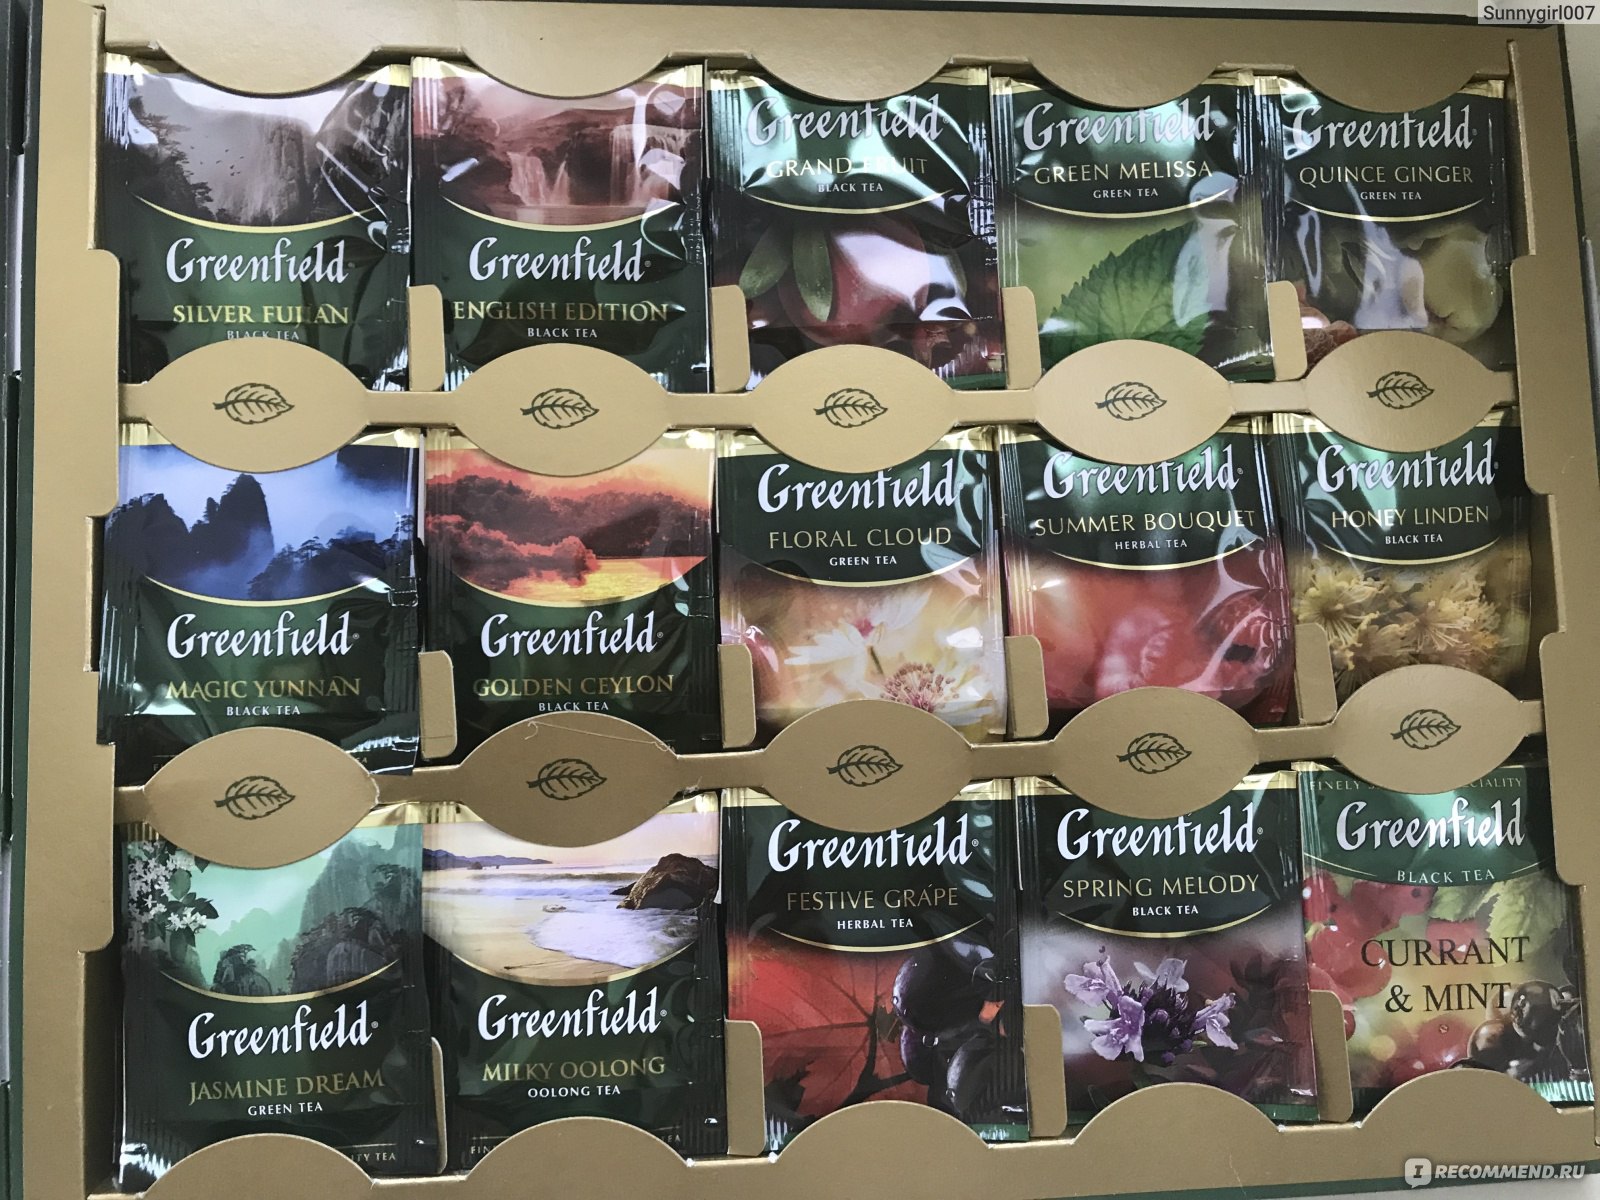 Greenfield collection. Чай Гринфилд разные вкусы. Чай Гринфилд вкусы в коробке ассорти. Чай черный Greenfield разные вкусы. Чай Greenfield разные вкусы.